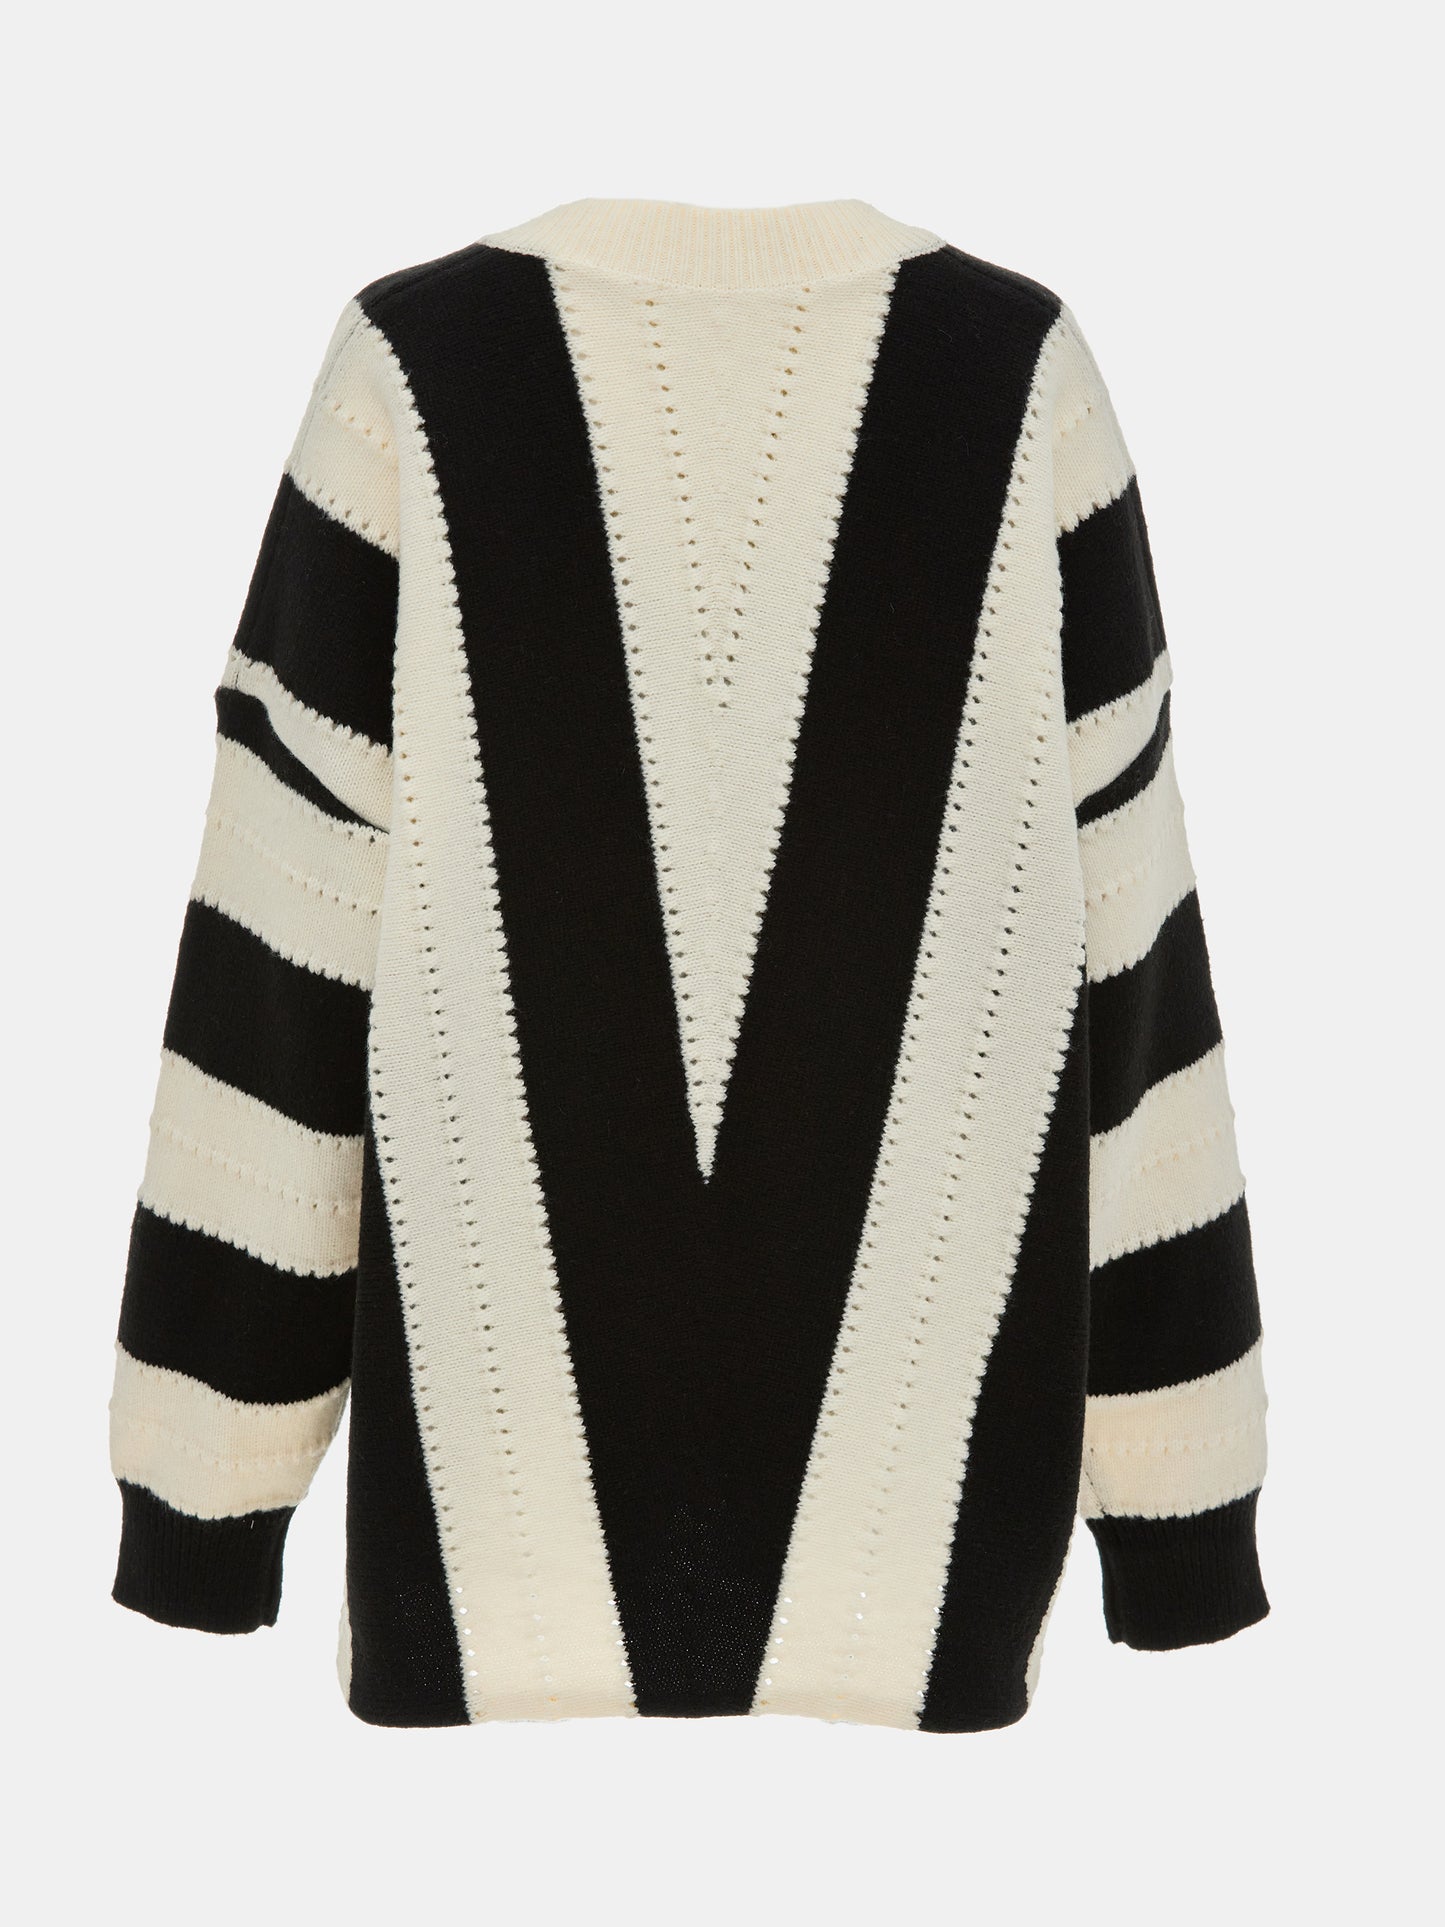 Unisex Striped Pullover, Black & White